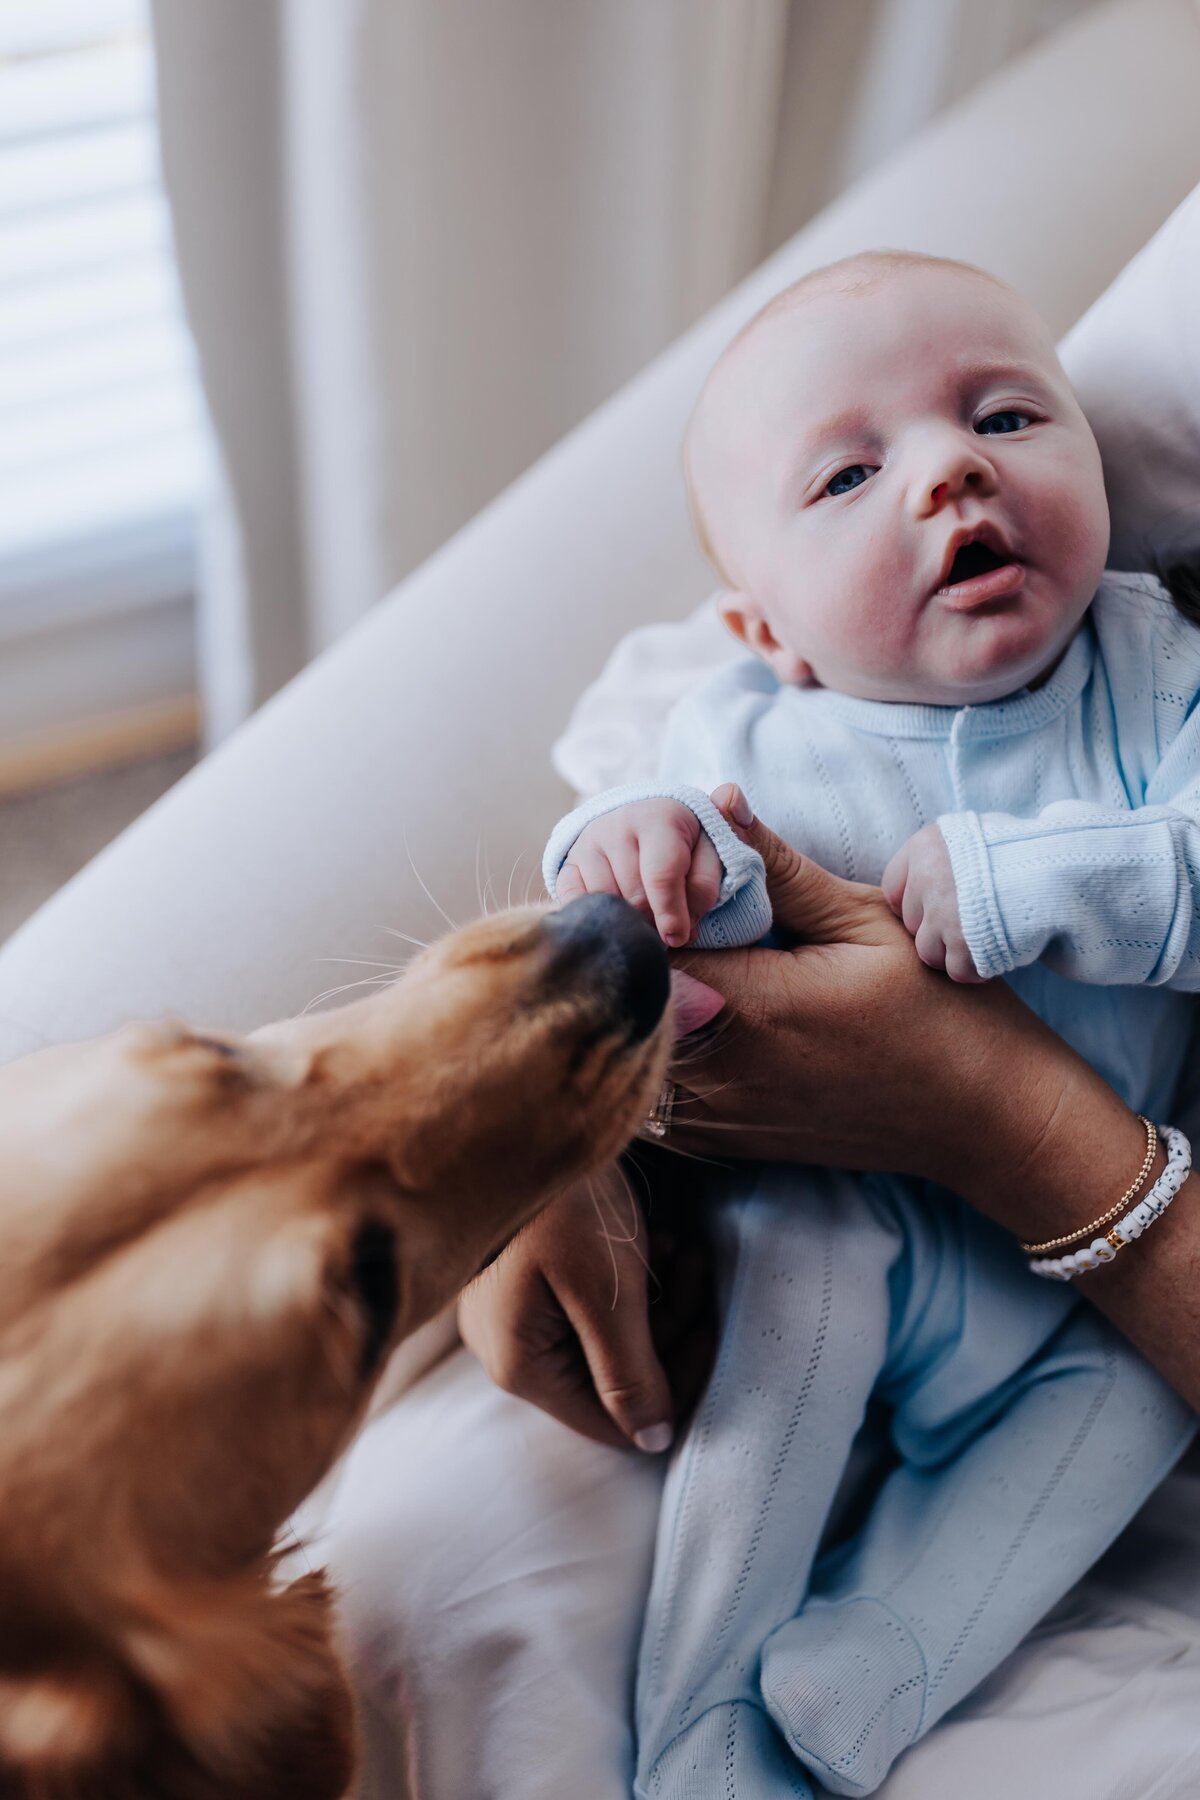 Nashville newborn photographer captures baby touching dog's nose